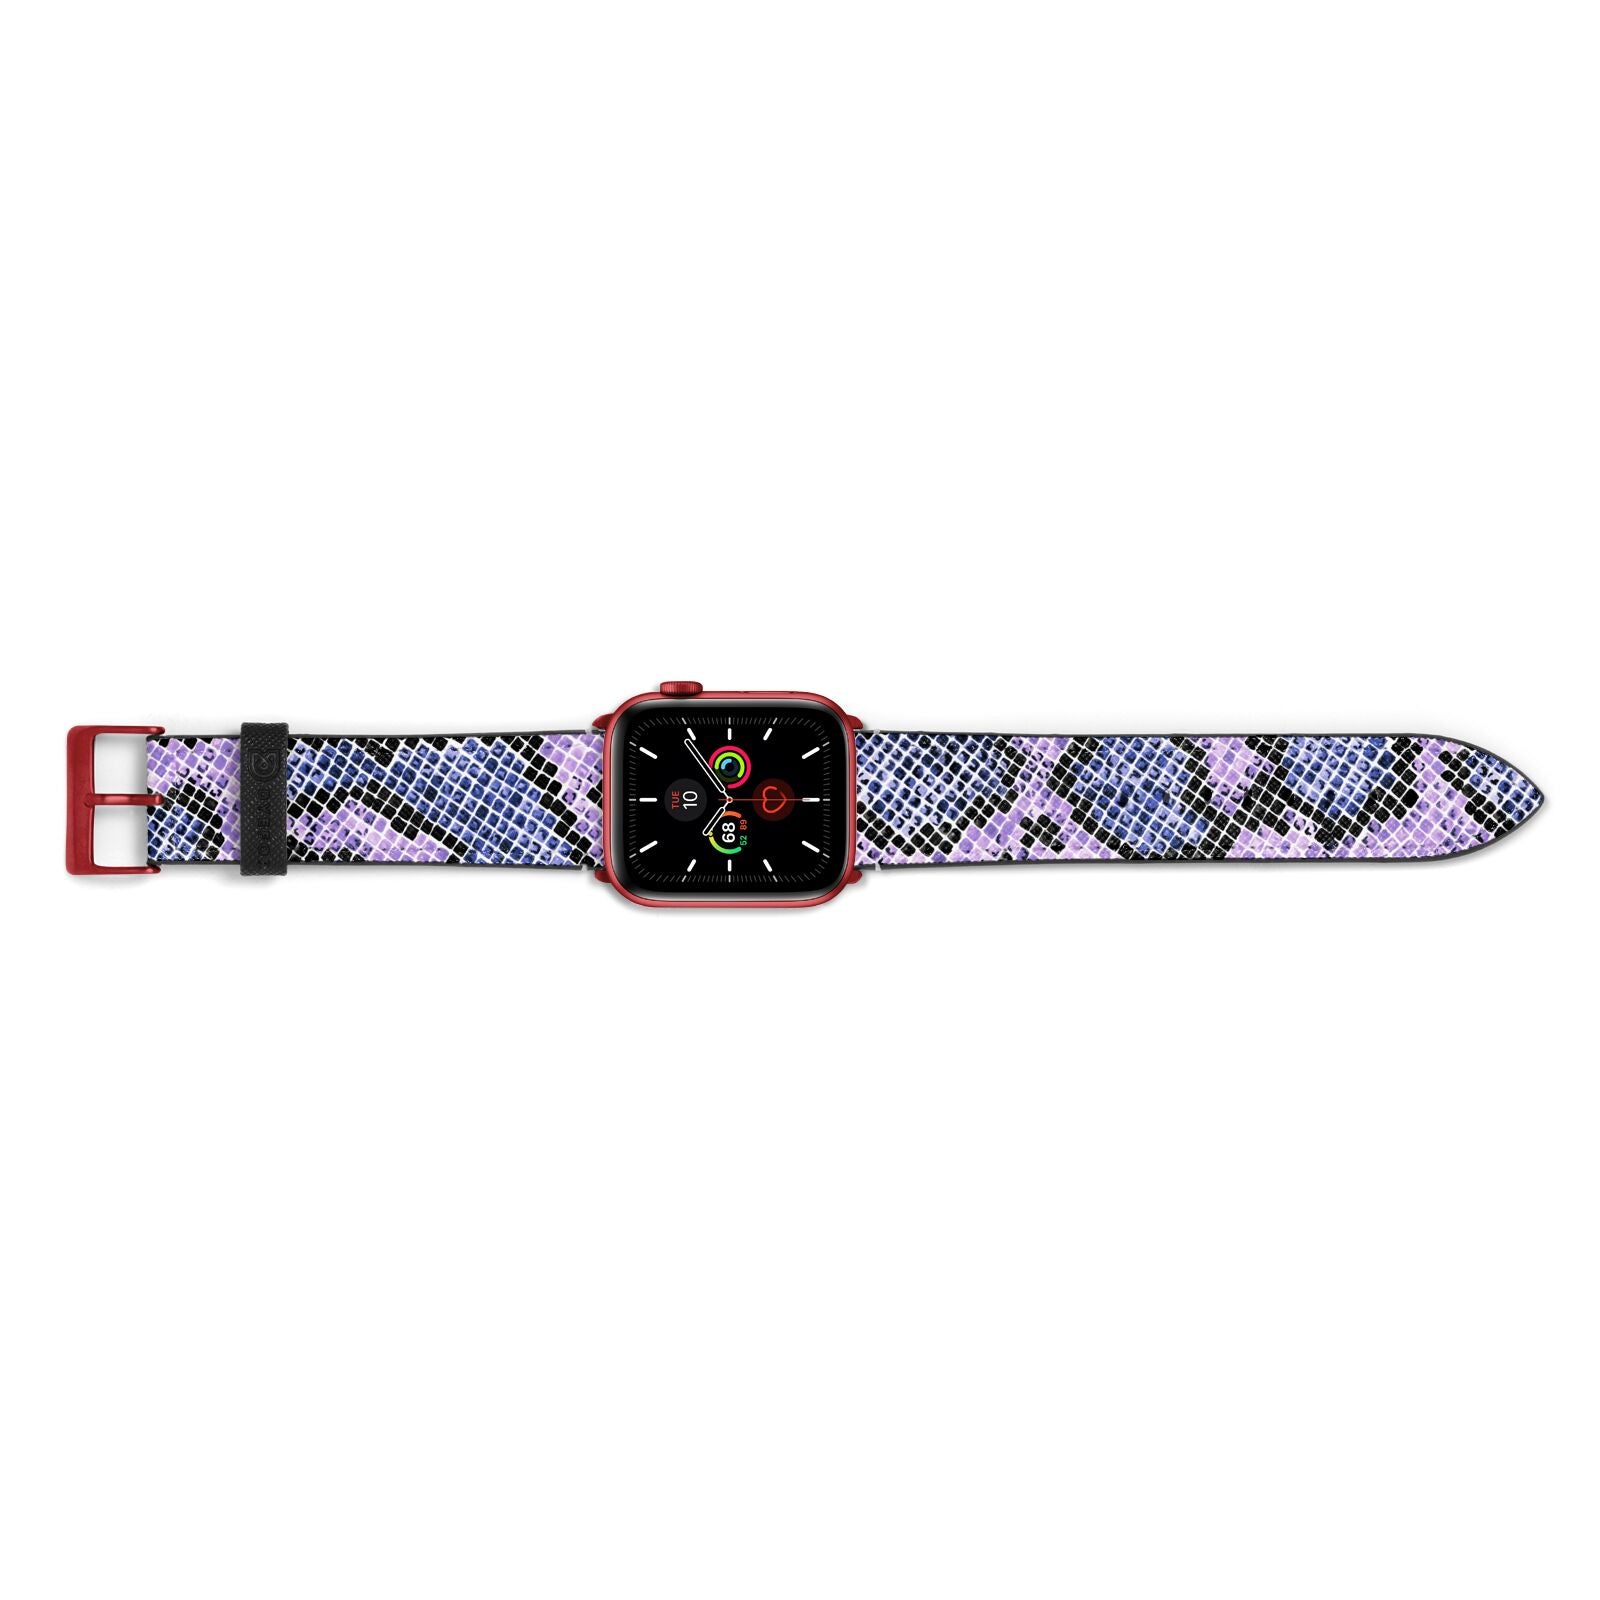 Purple And Blue Snakeskin Apple Watch Strap Landscape Image Red Hardware